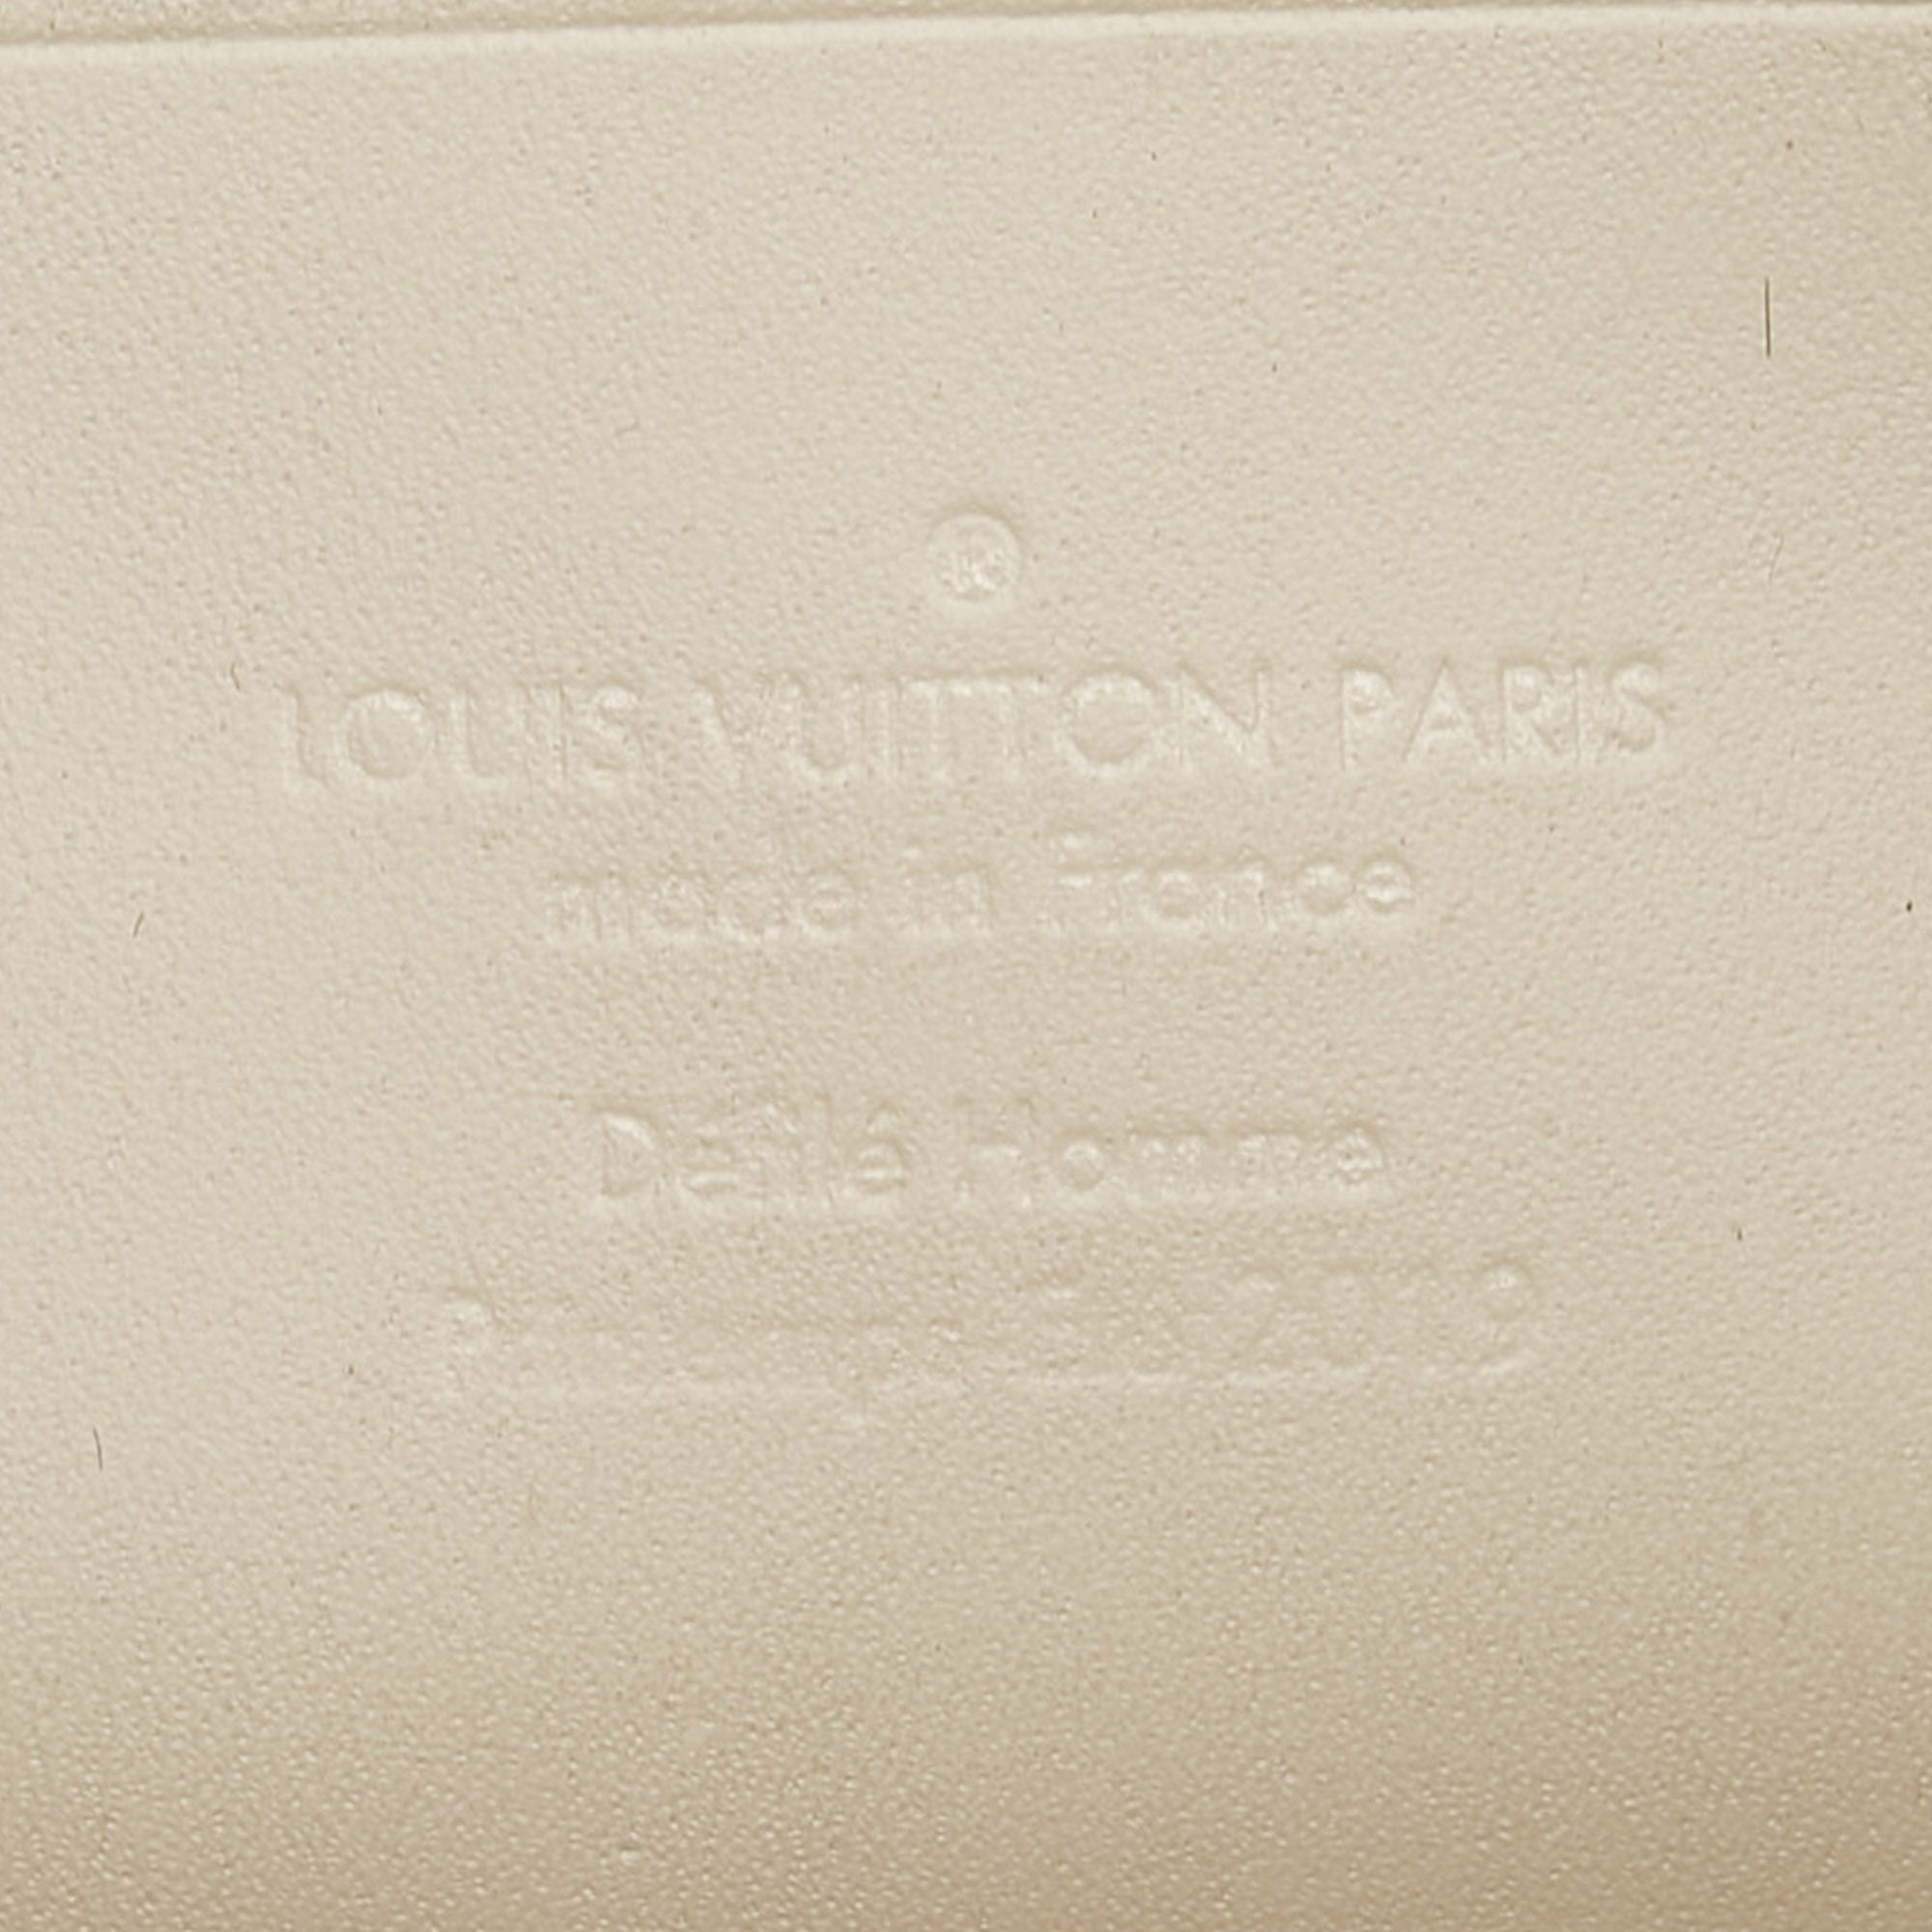 LOUIS VUITTON LOUIS VUITTON Pochette Volga Clutch Bag M53551 Monogram  Taurillon Leather White M53551